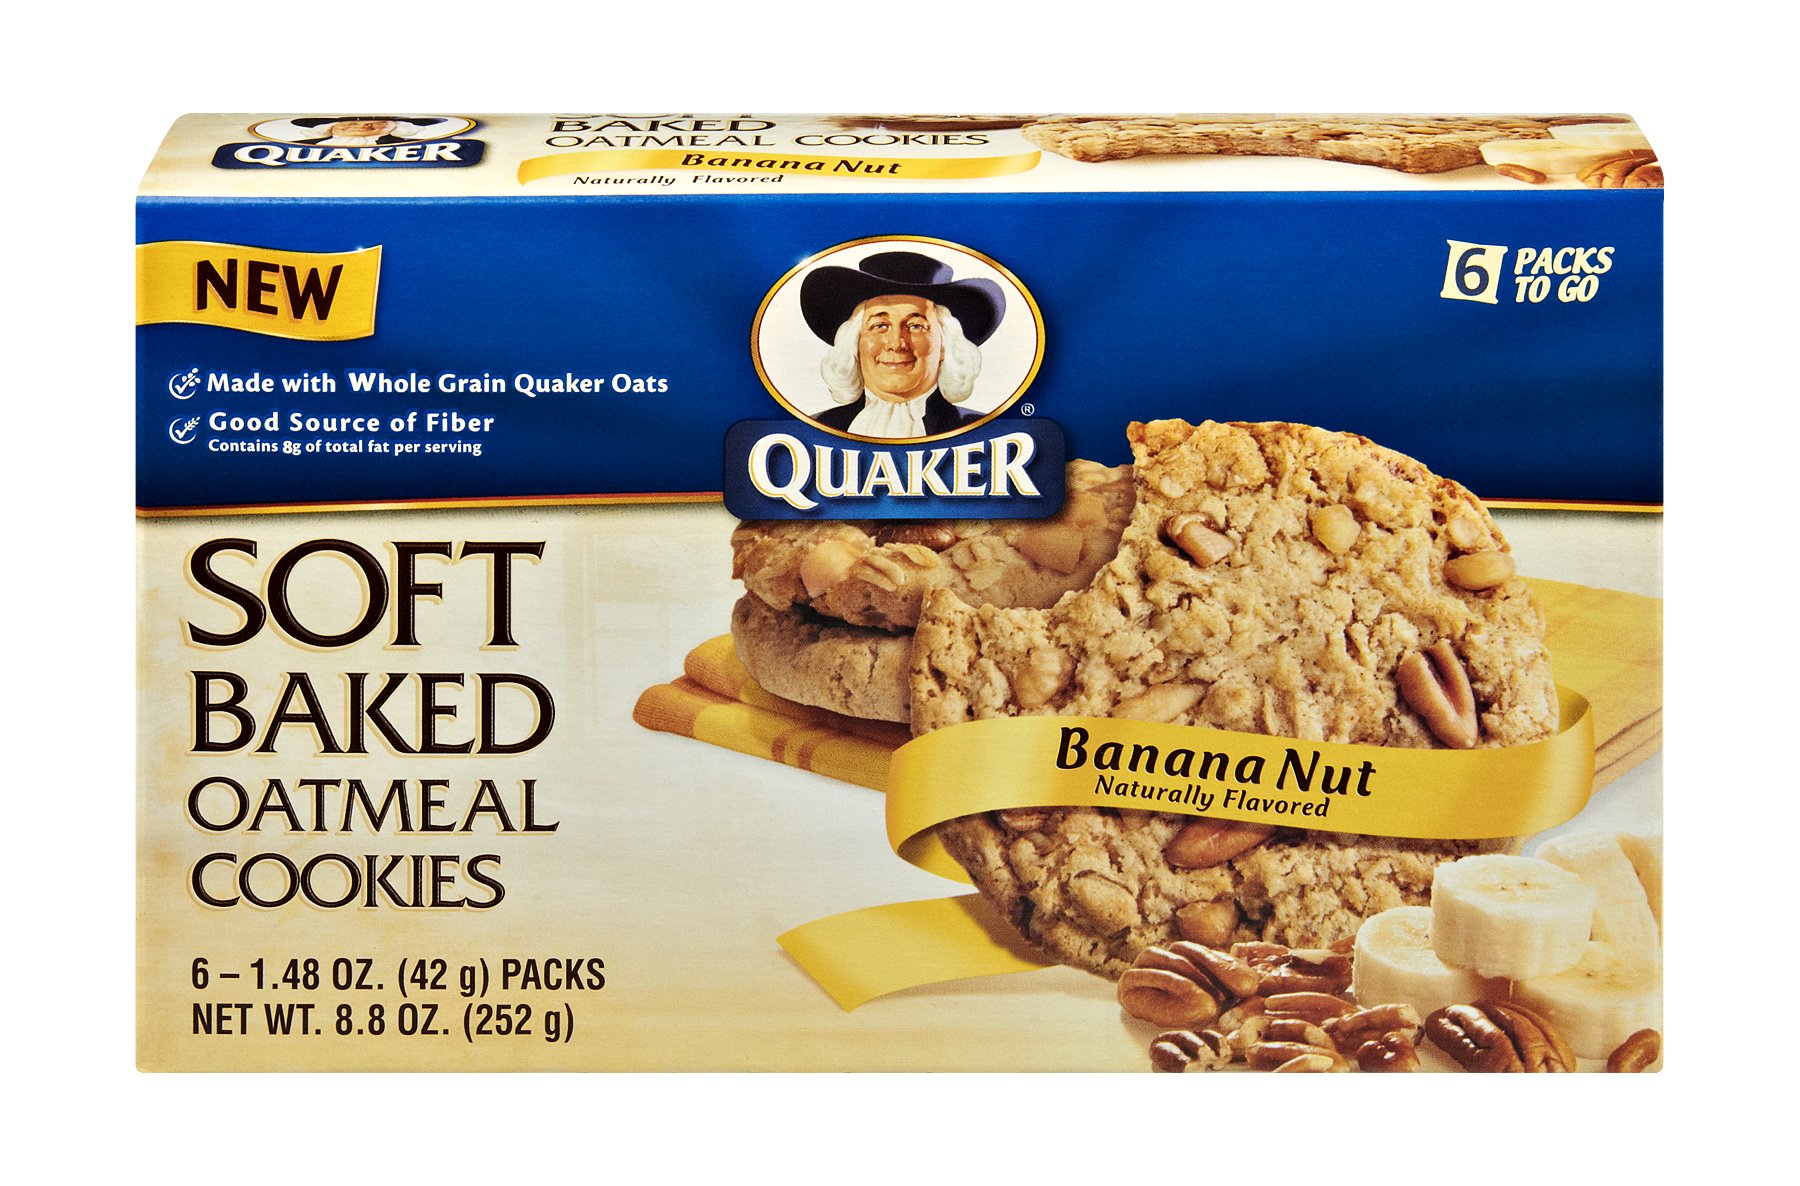 Quaker Soft Baked Oatmeal Banana Nut Cookies - Shop Cookies at H-E-B